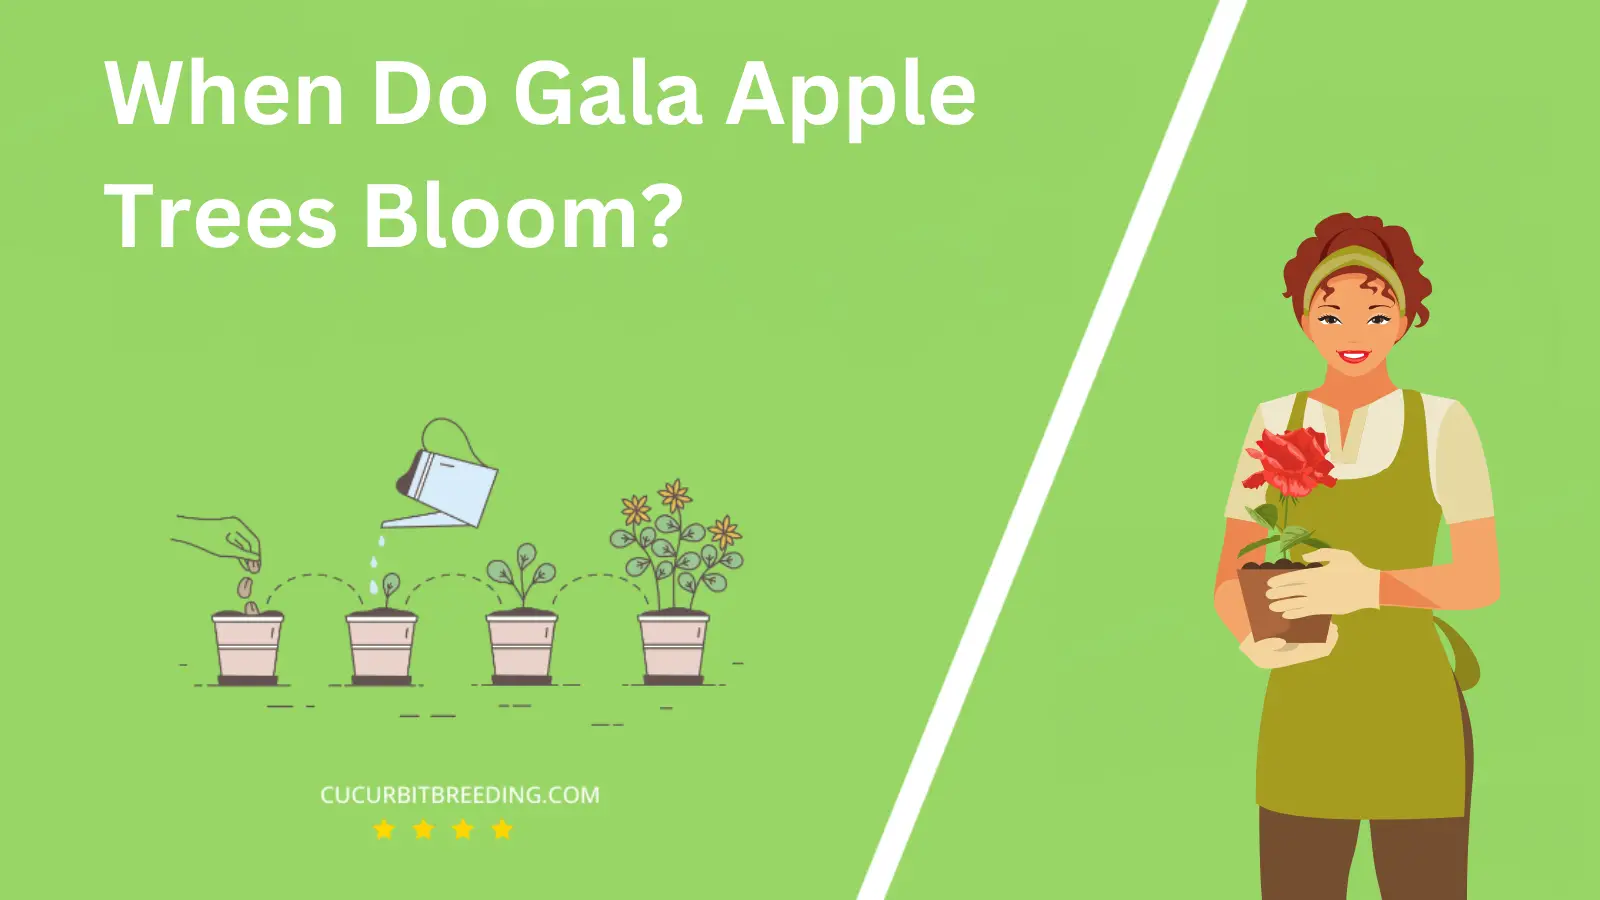 When Do Gala Apple Trees Bloom?